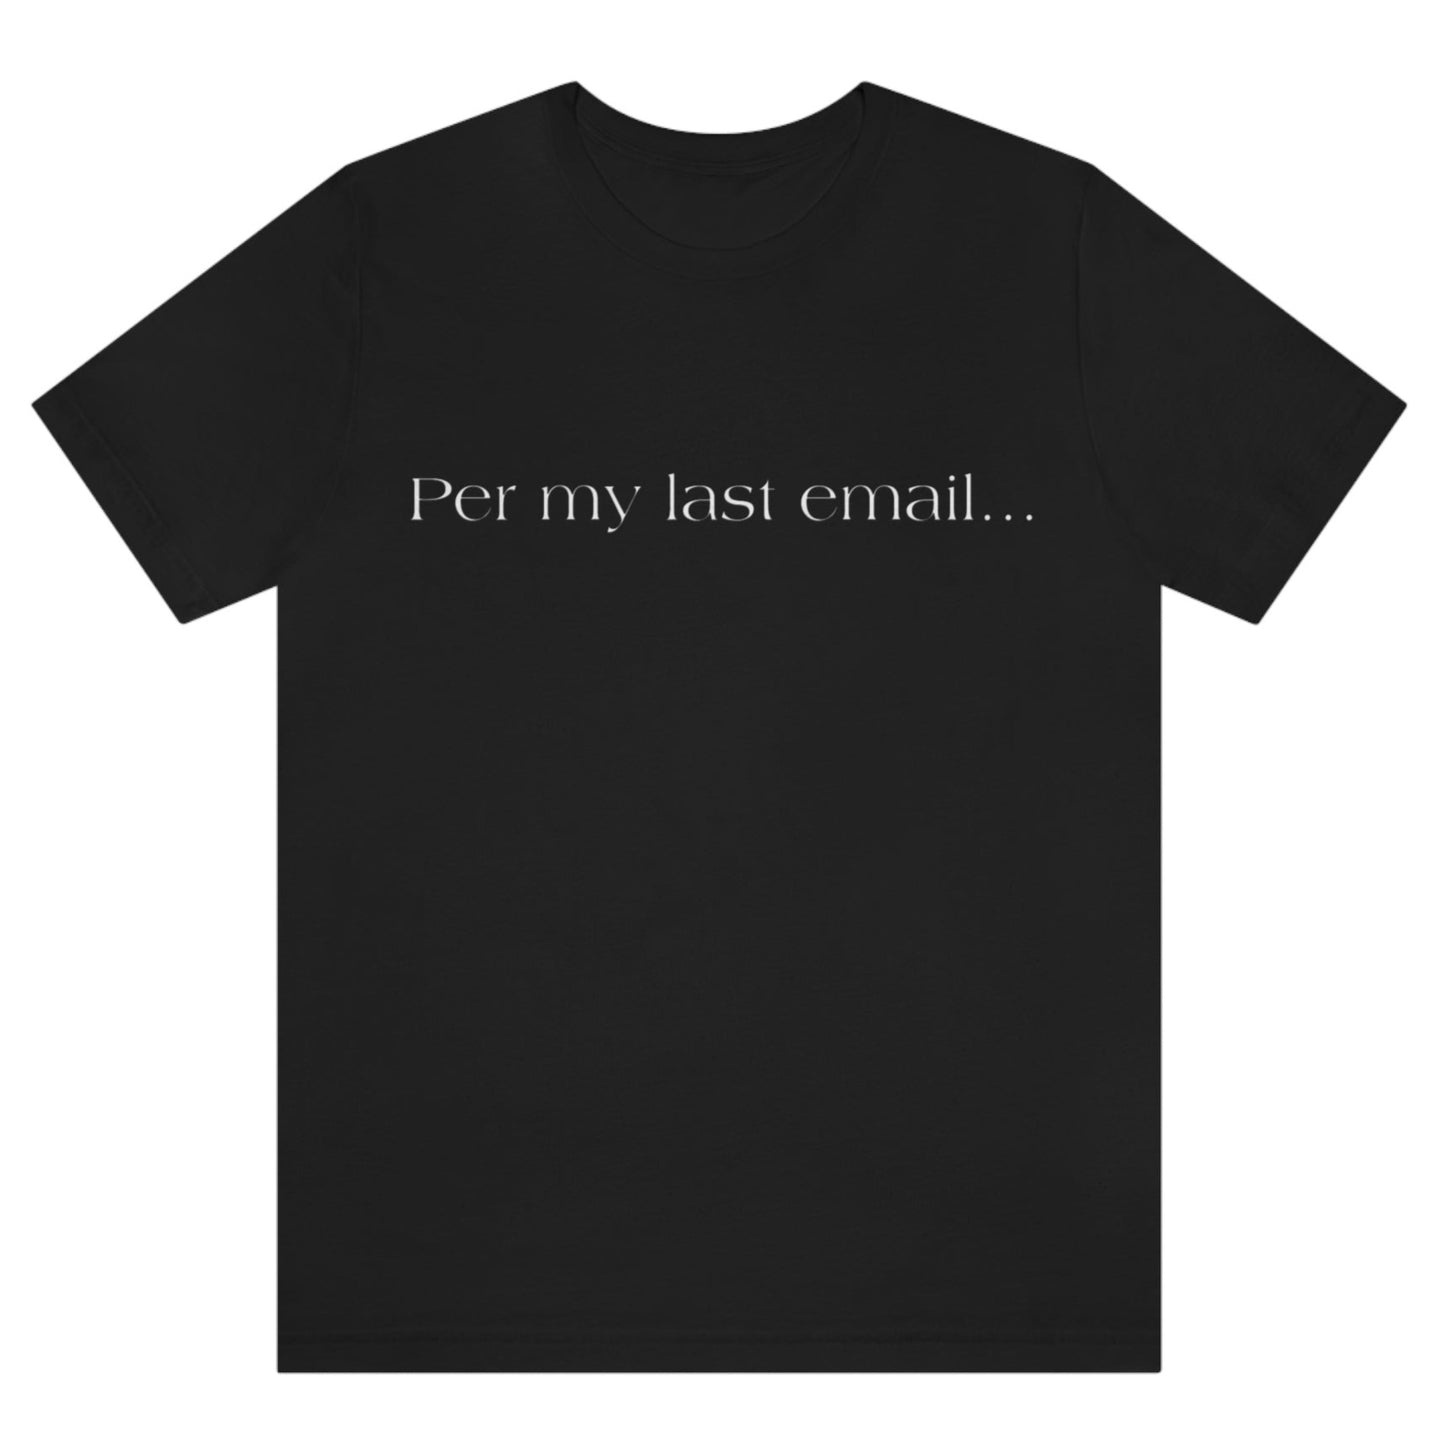 per-my-last-email-black-t-shirt-office-humor